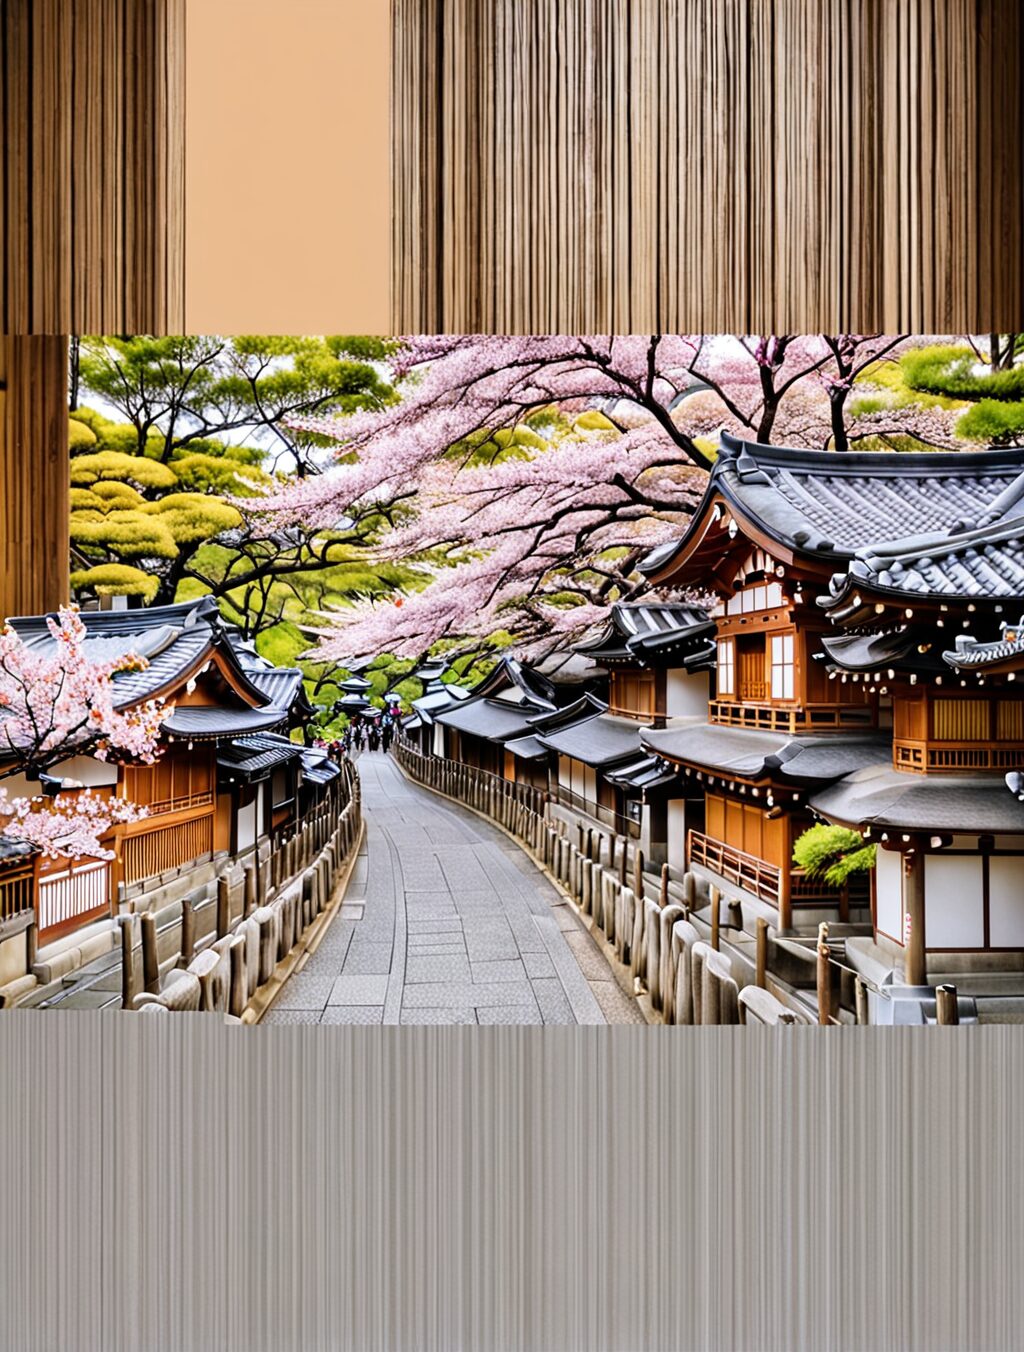 japan osaka kyoto itinerary